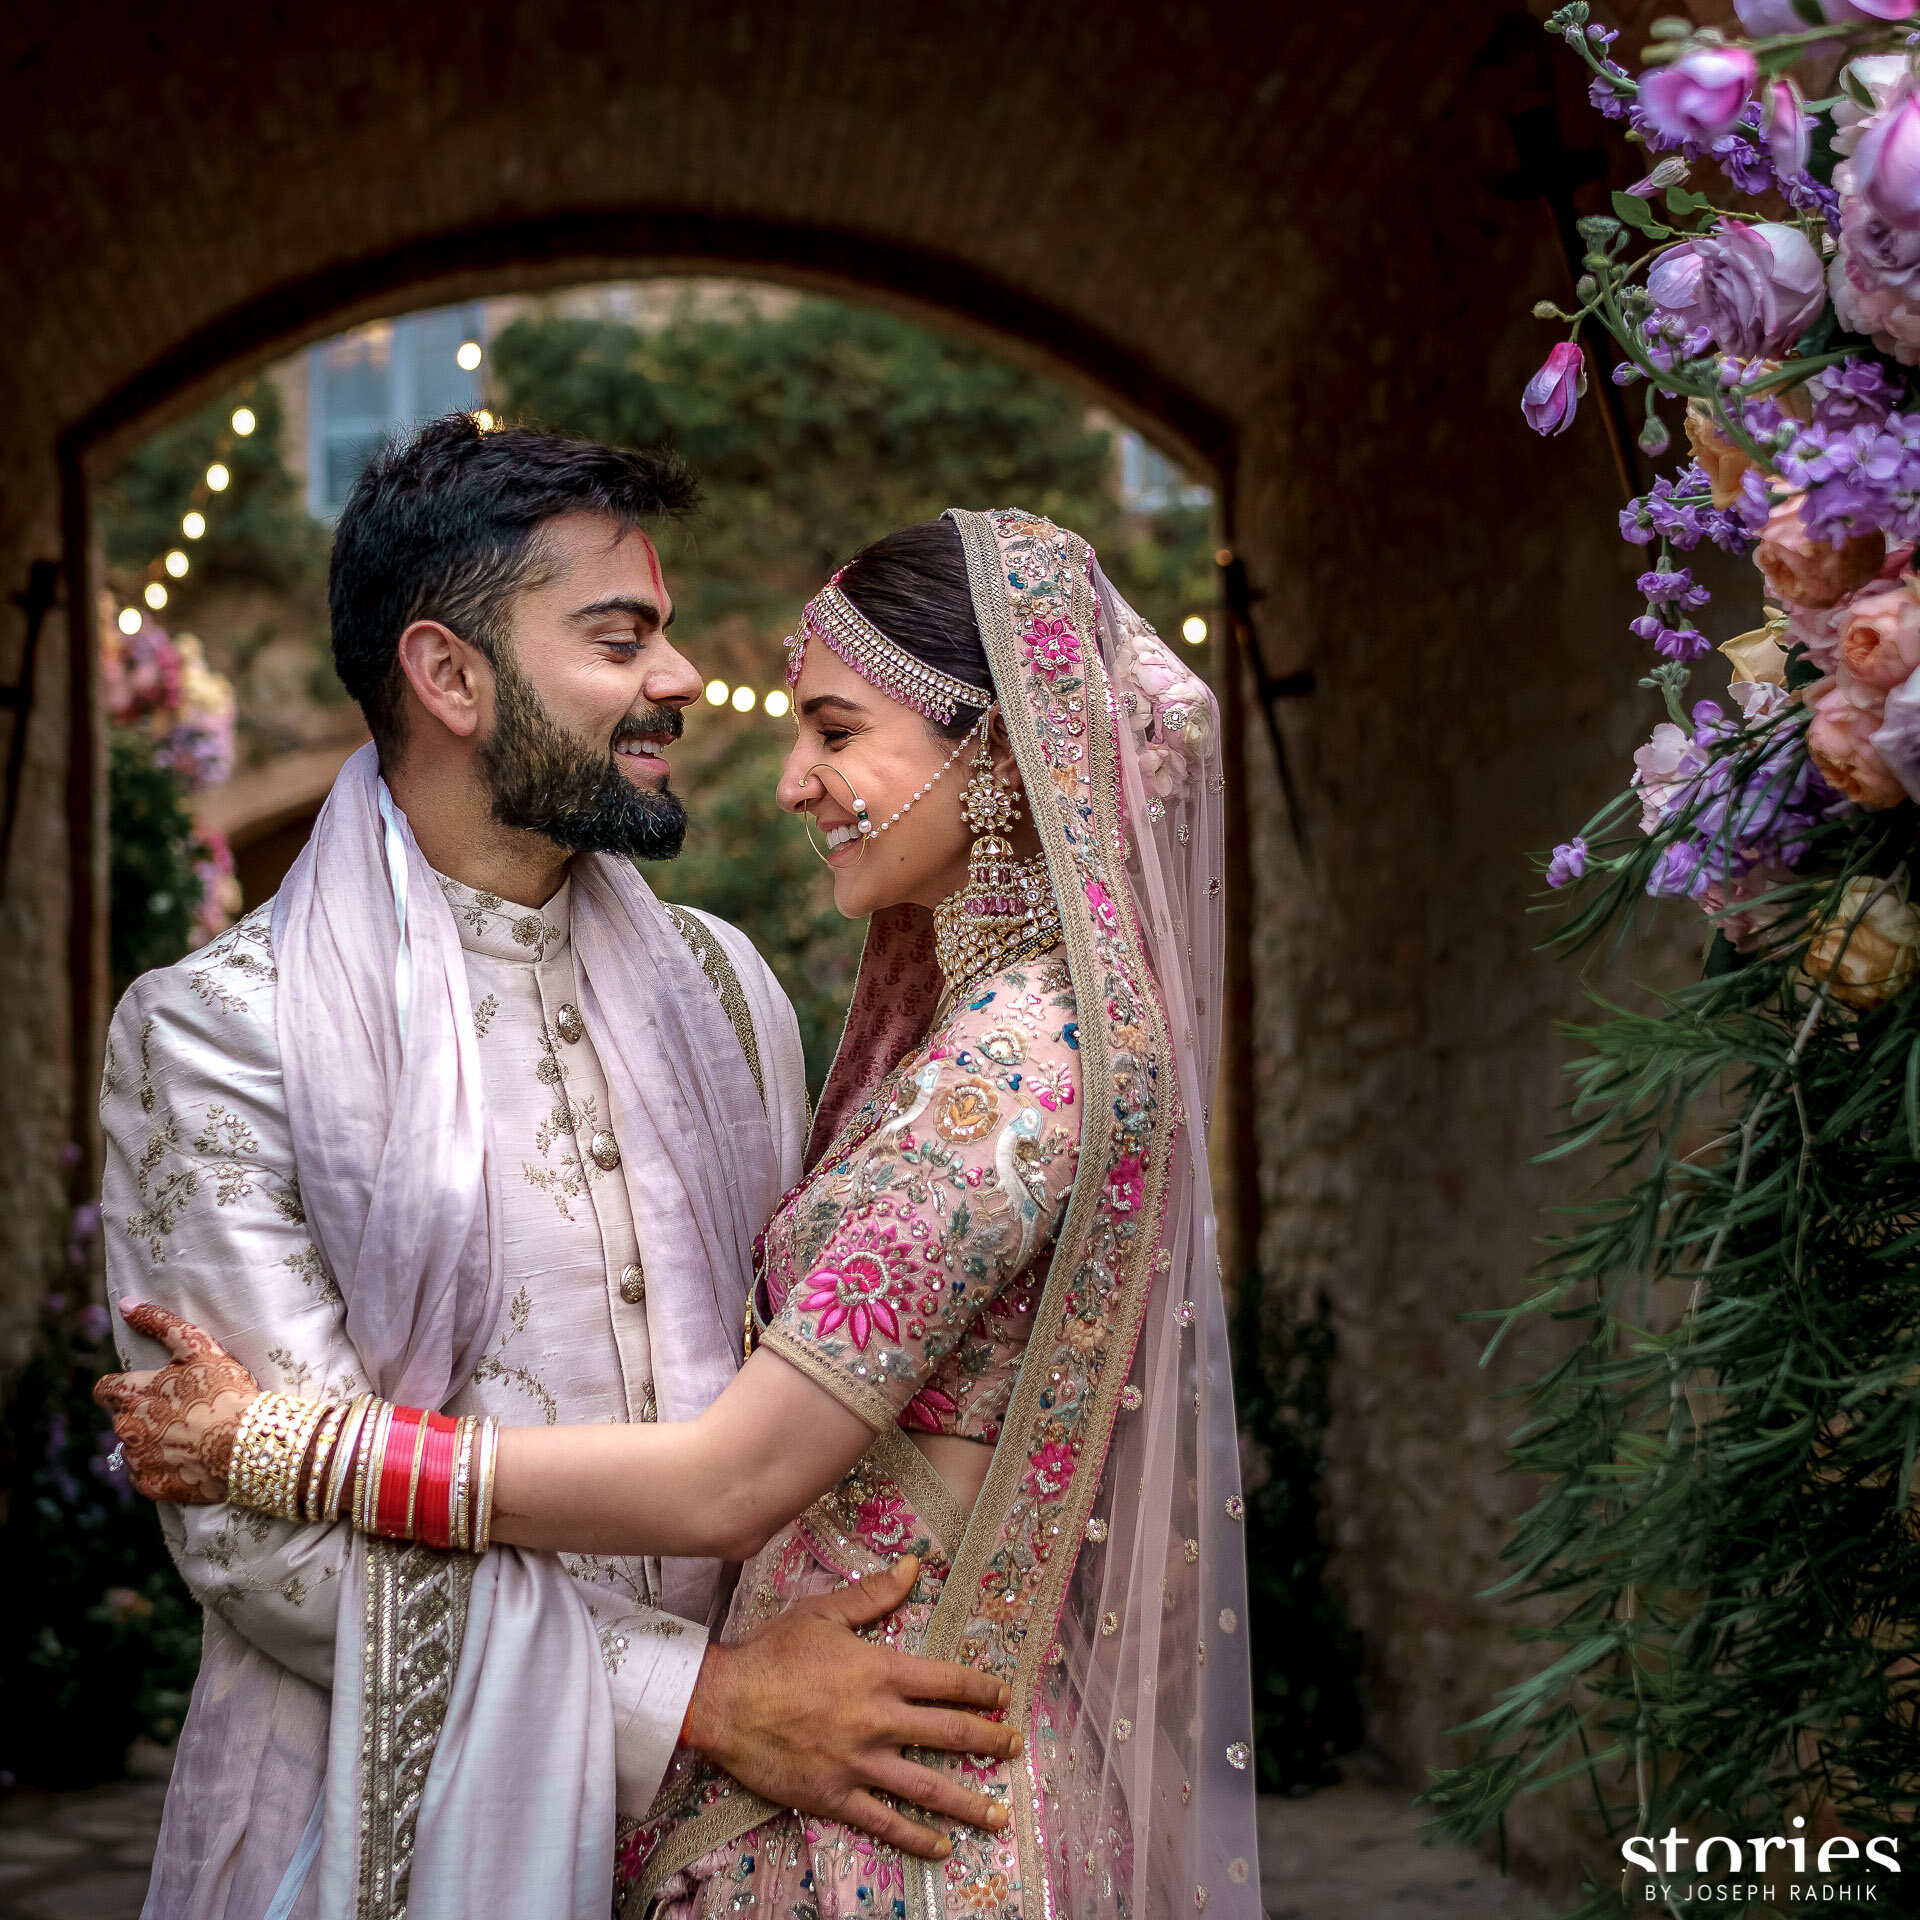 Anushka Sharma and Virat Kohli's wedding (Pic Credit: Stories by Joseph Radhik)